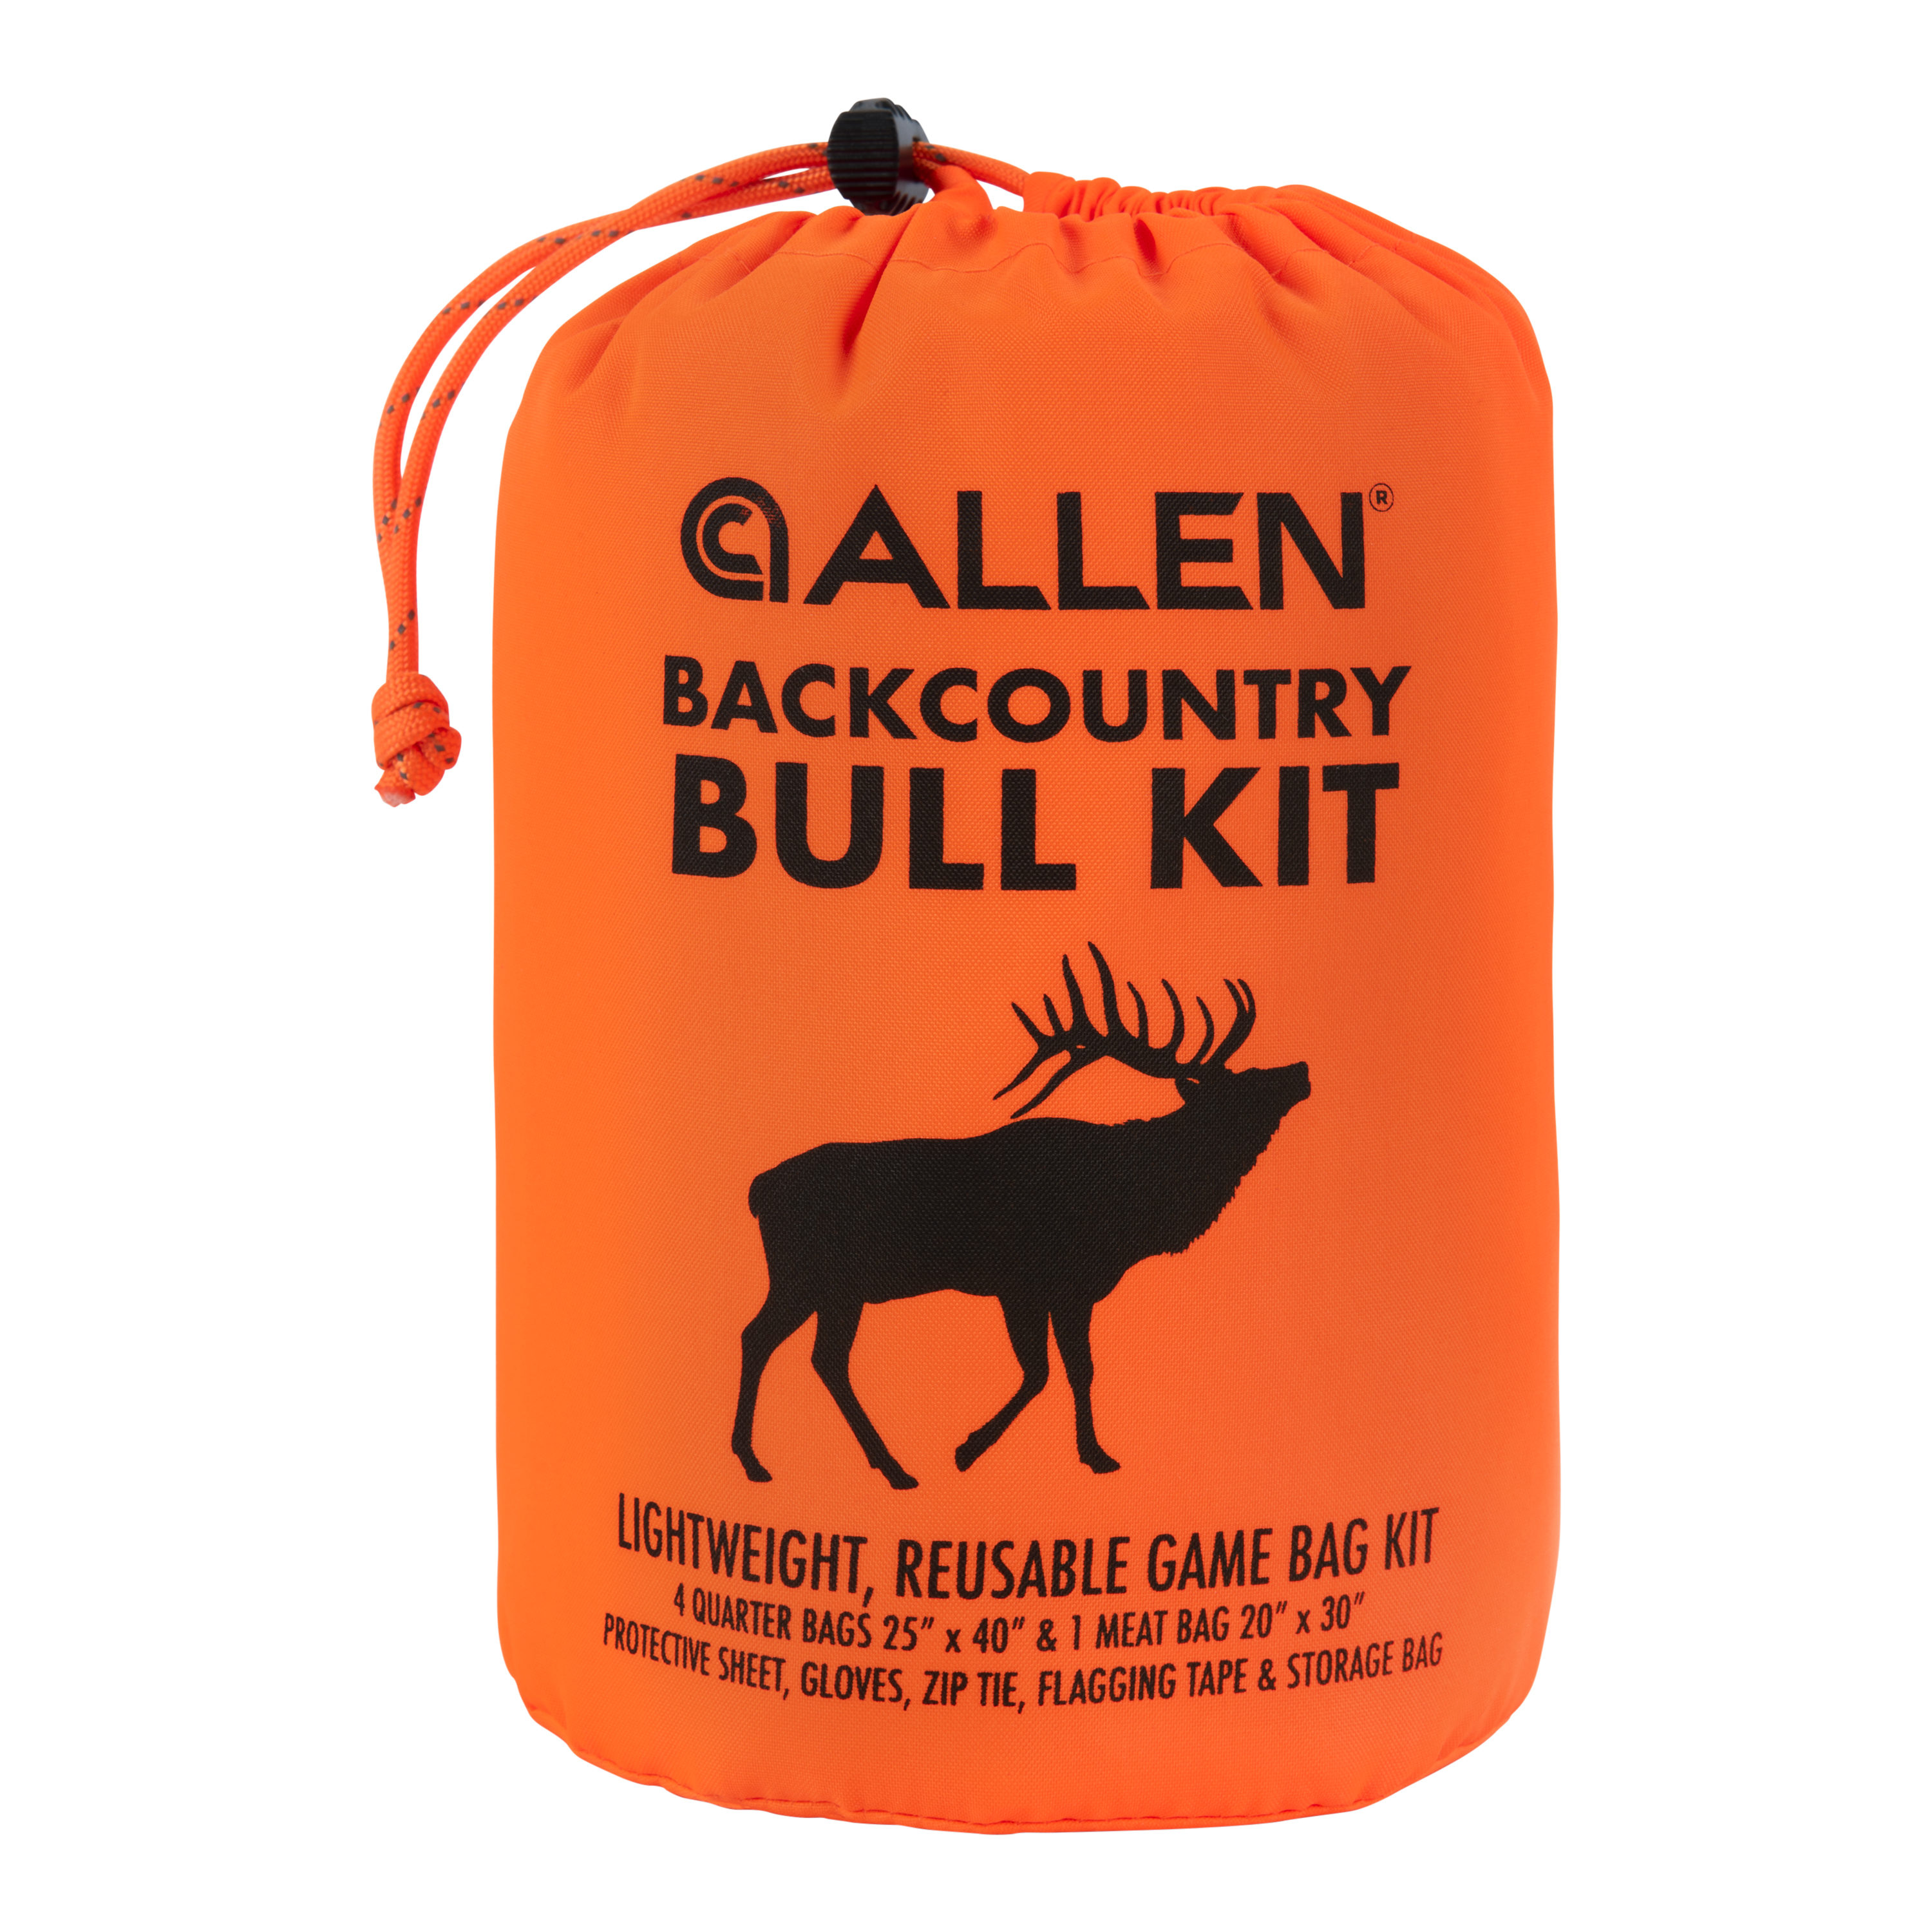 Allen Backcountry Meat Bags 4 Pack 20in x 30in